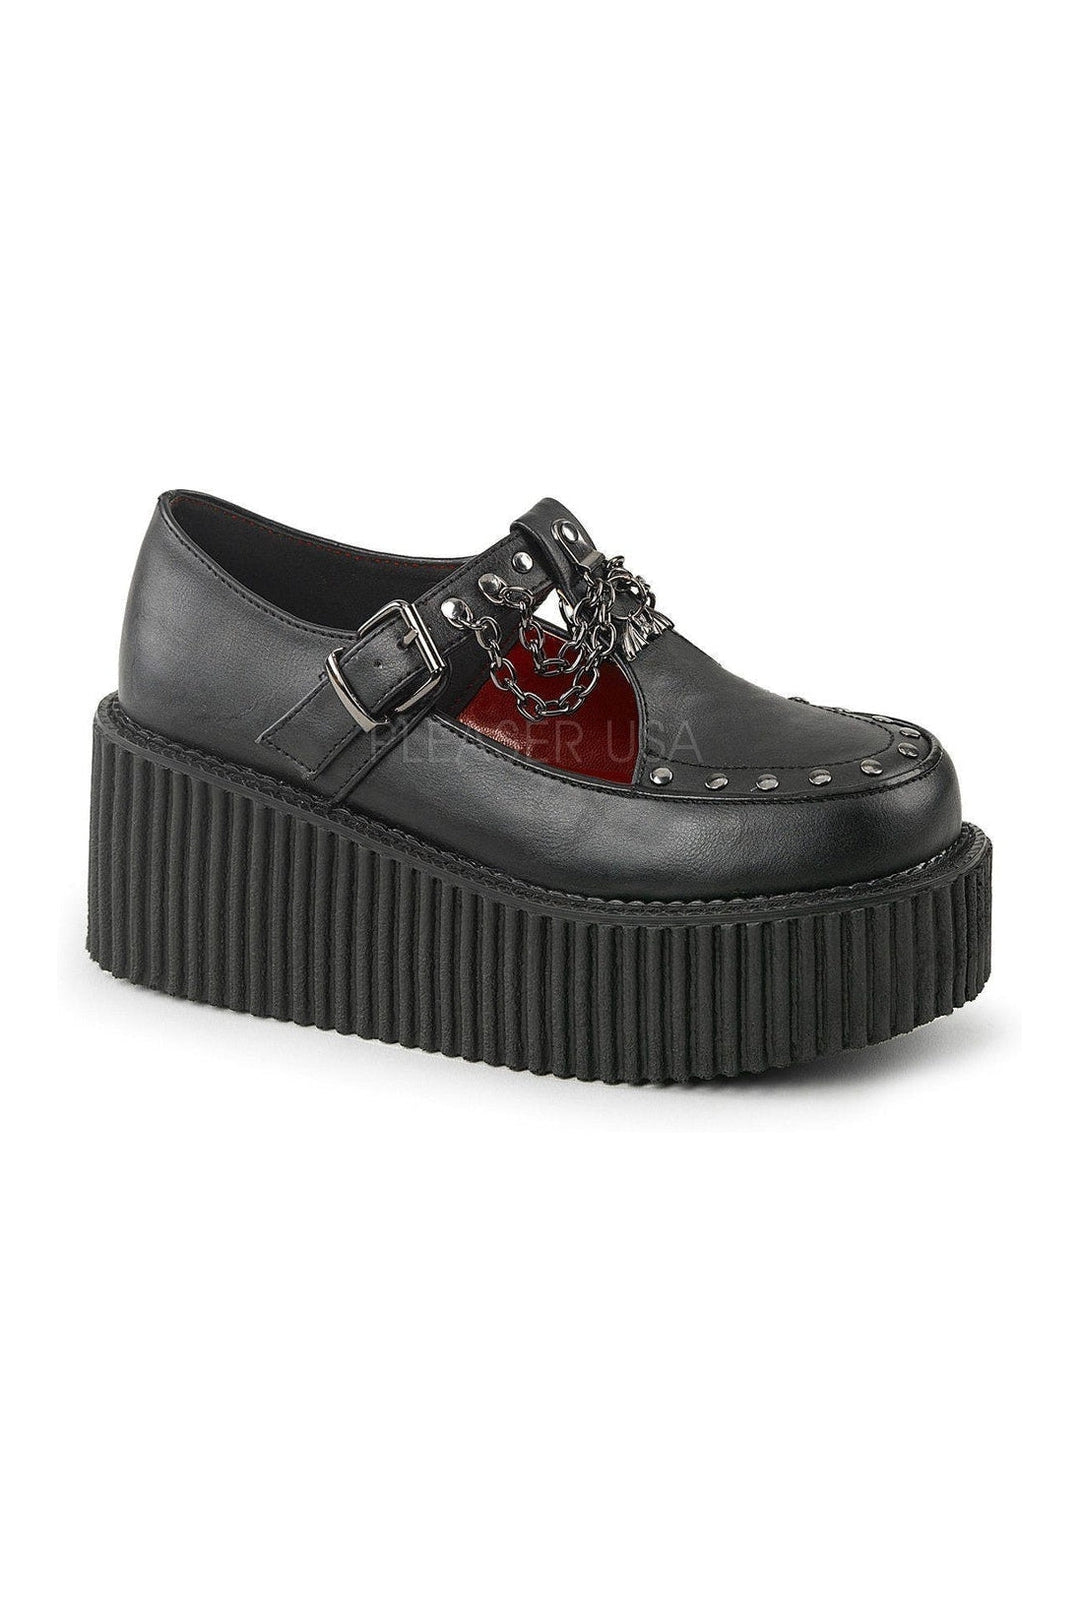 CREEPER-215 Demonia Shoe | Black Faux Leather-Demonia-Black-Creepers-SEXYSHOES.COM